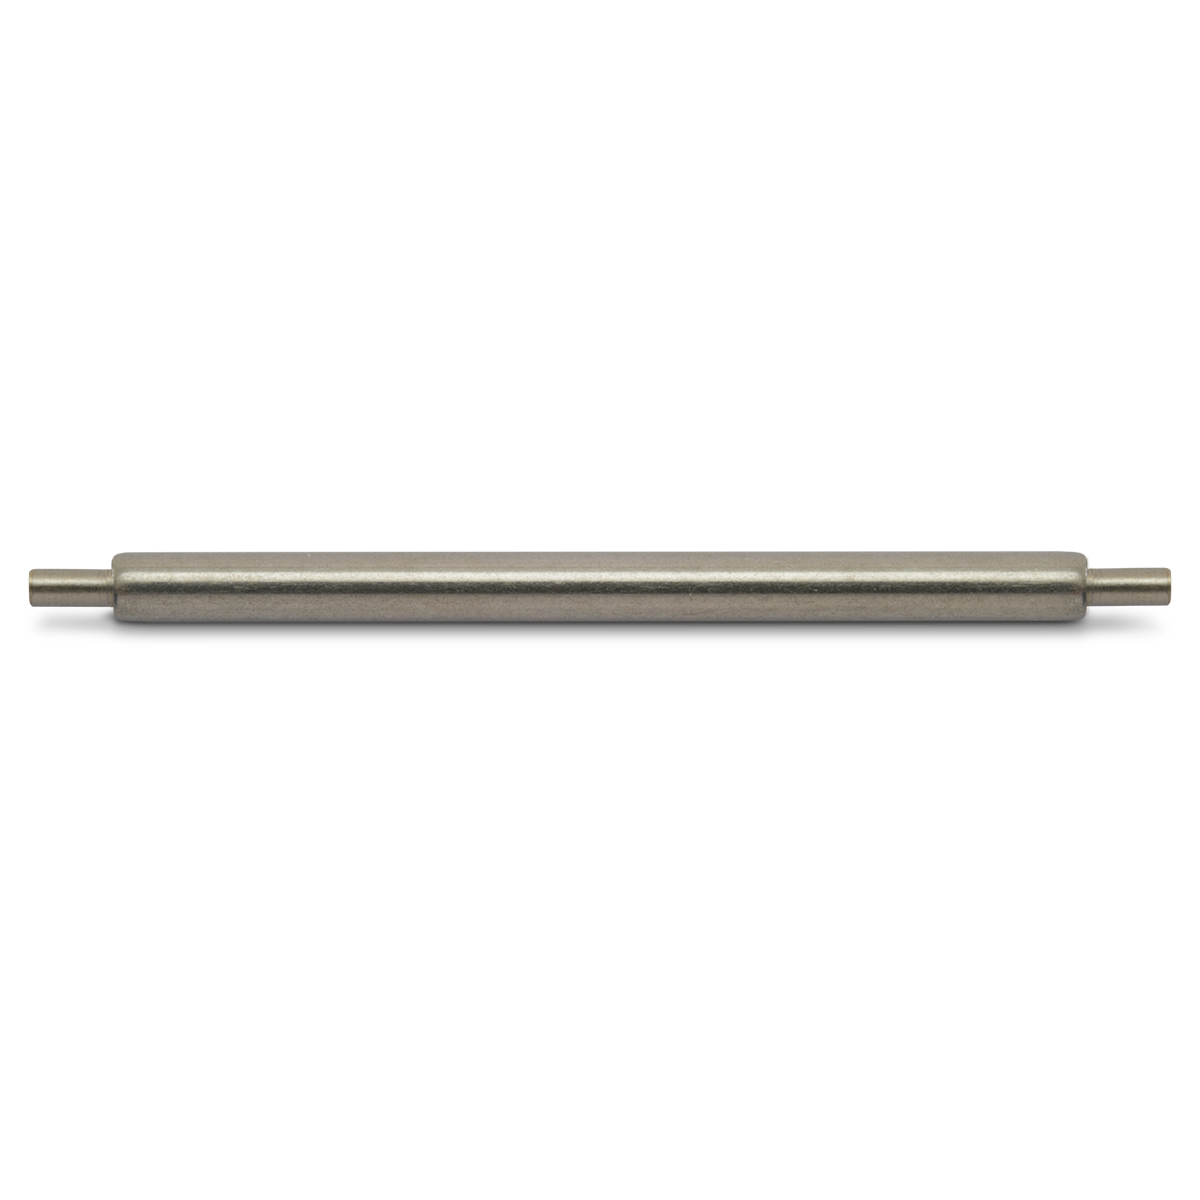 100 Barrettes en acier inox, sans ergots, tuyau Ø 1,0 mm, pivot Ø 0,6 mm, longueur 18 mm,  extra fin